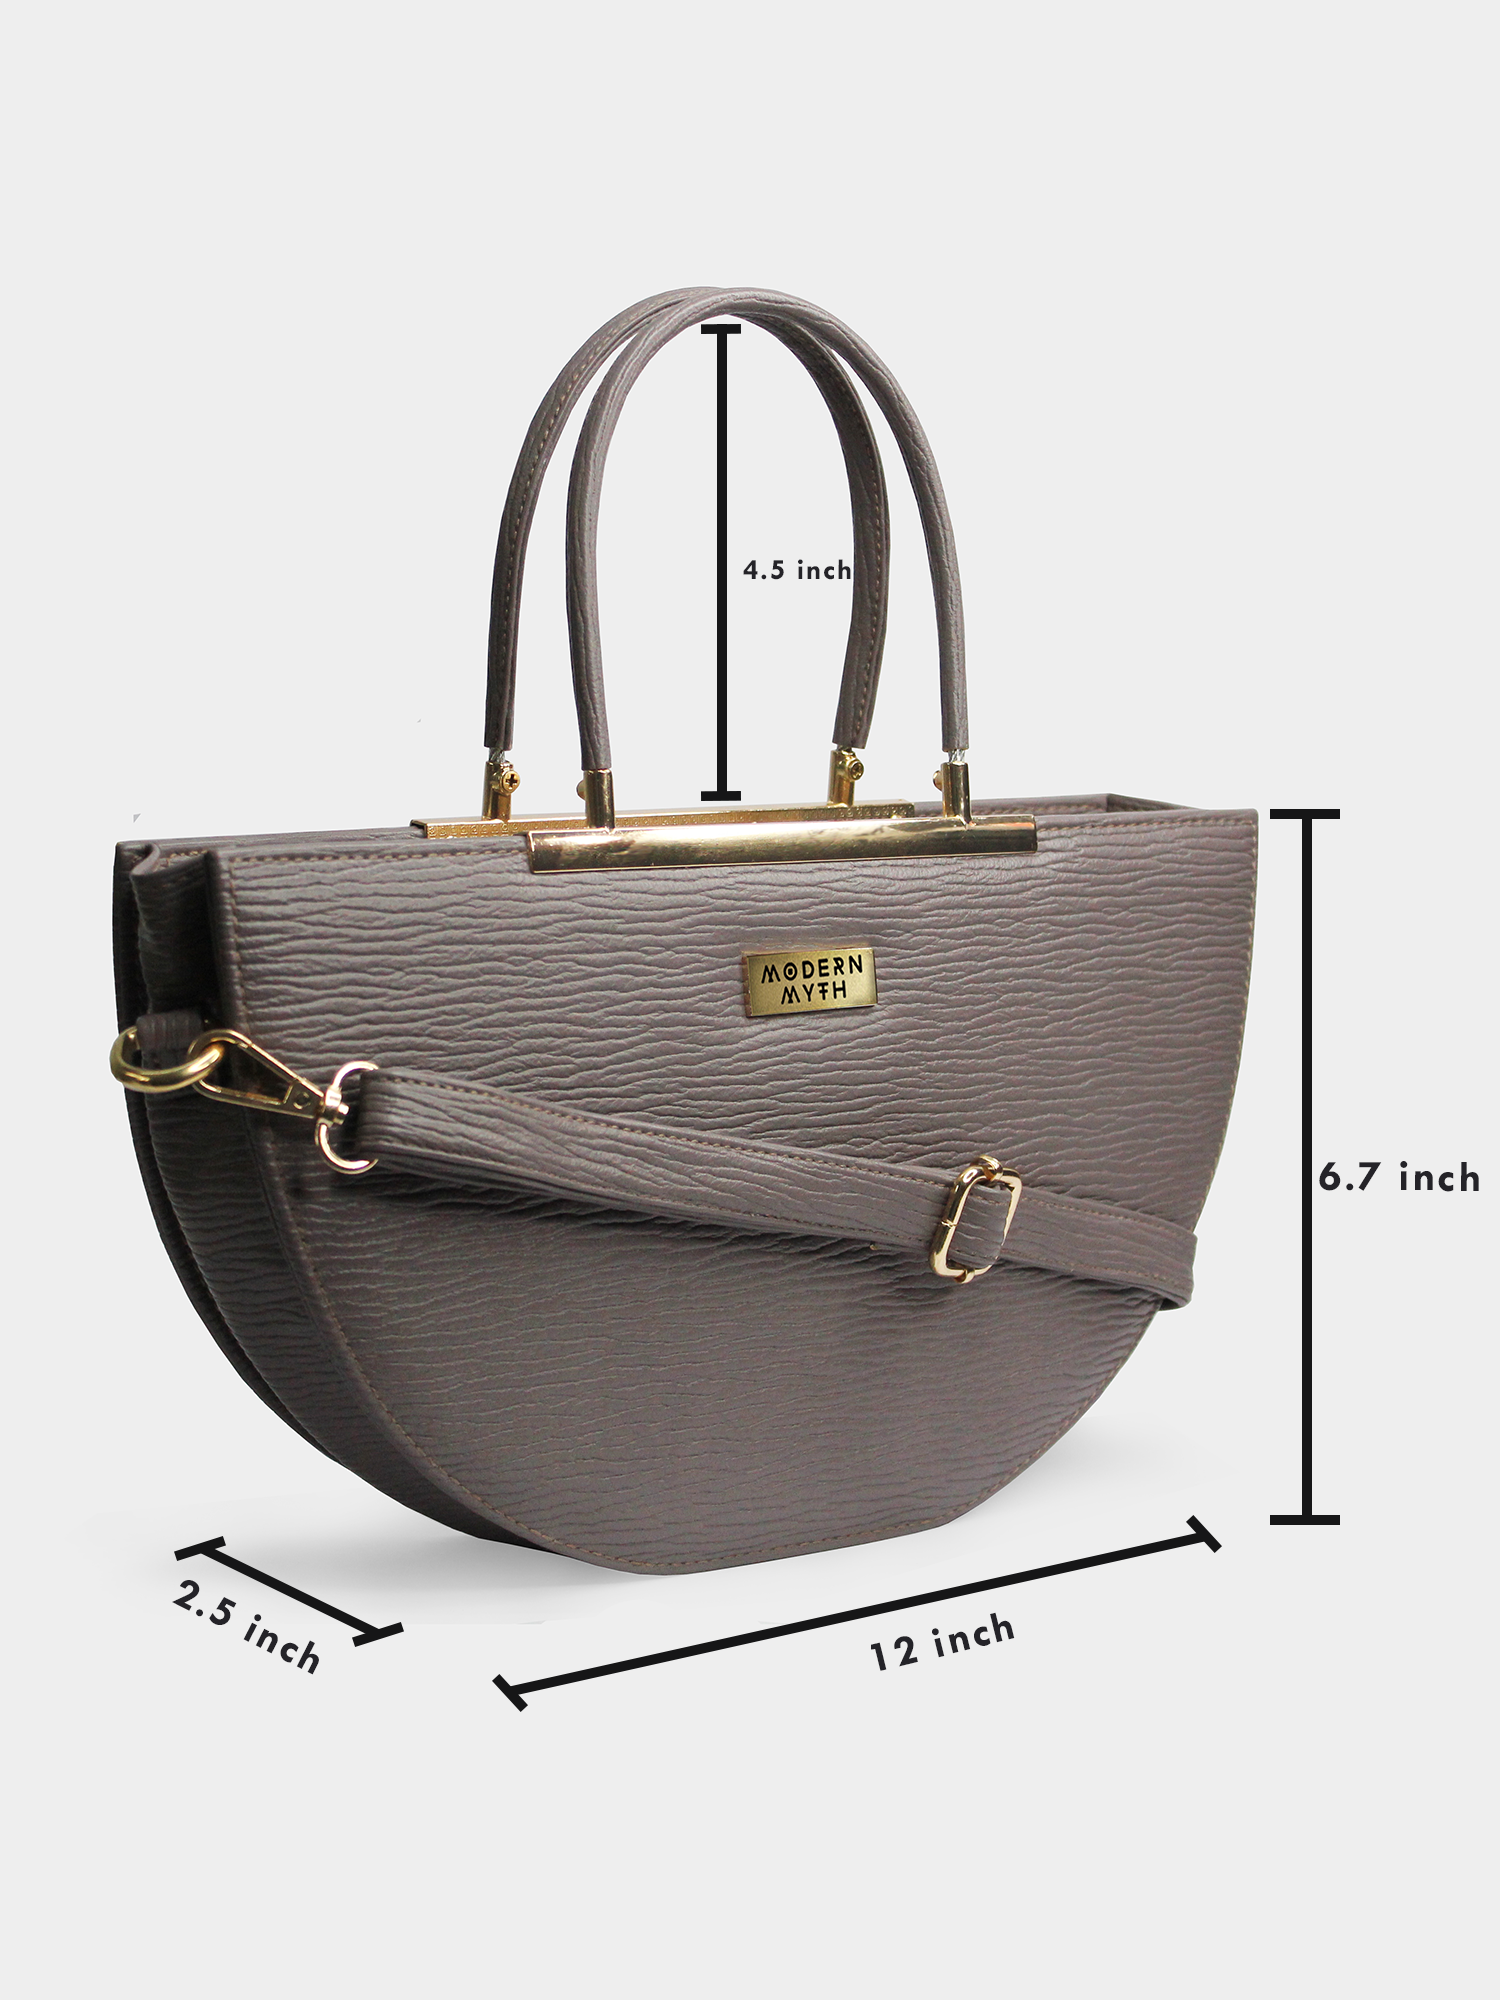 Buy OON Sling Bag for Women Handbag Shady White & Grey Designer Felt  Shoulder Purse for Ladies at Amazon.in